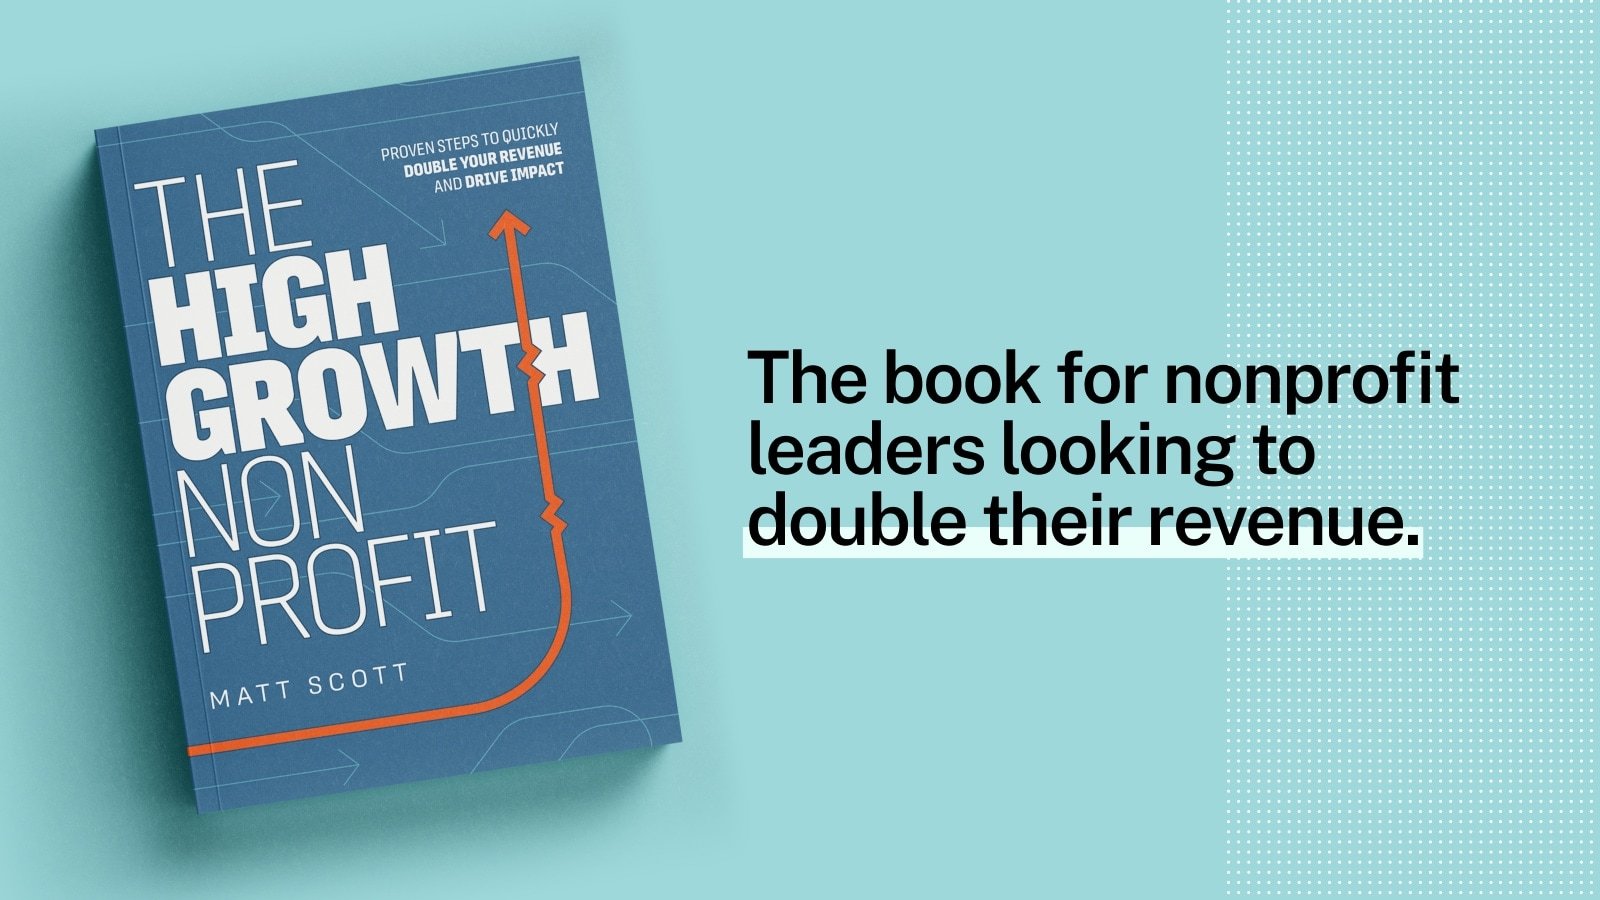 The High-Growth Nonprofit, by Matt Scott: Get your free copy!